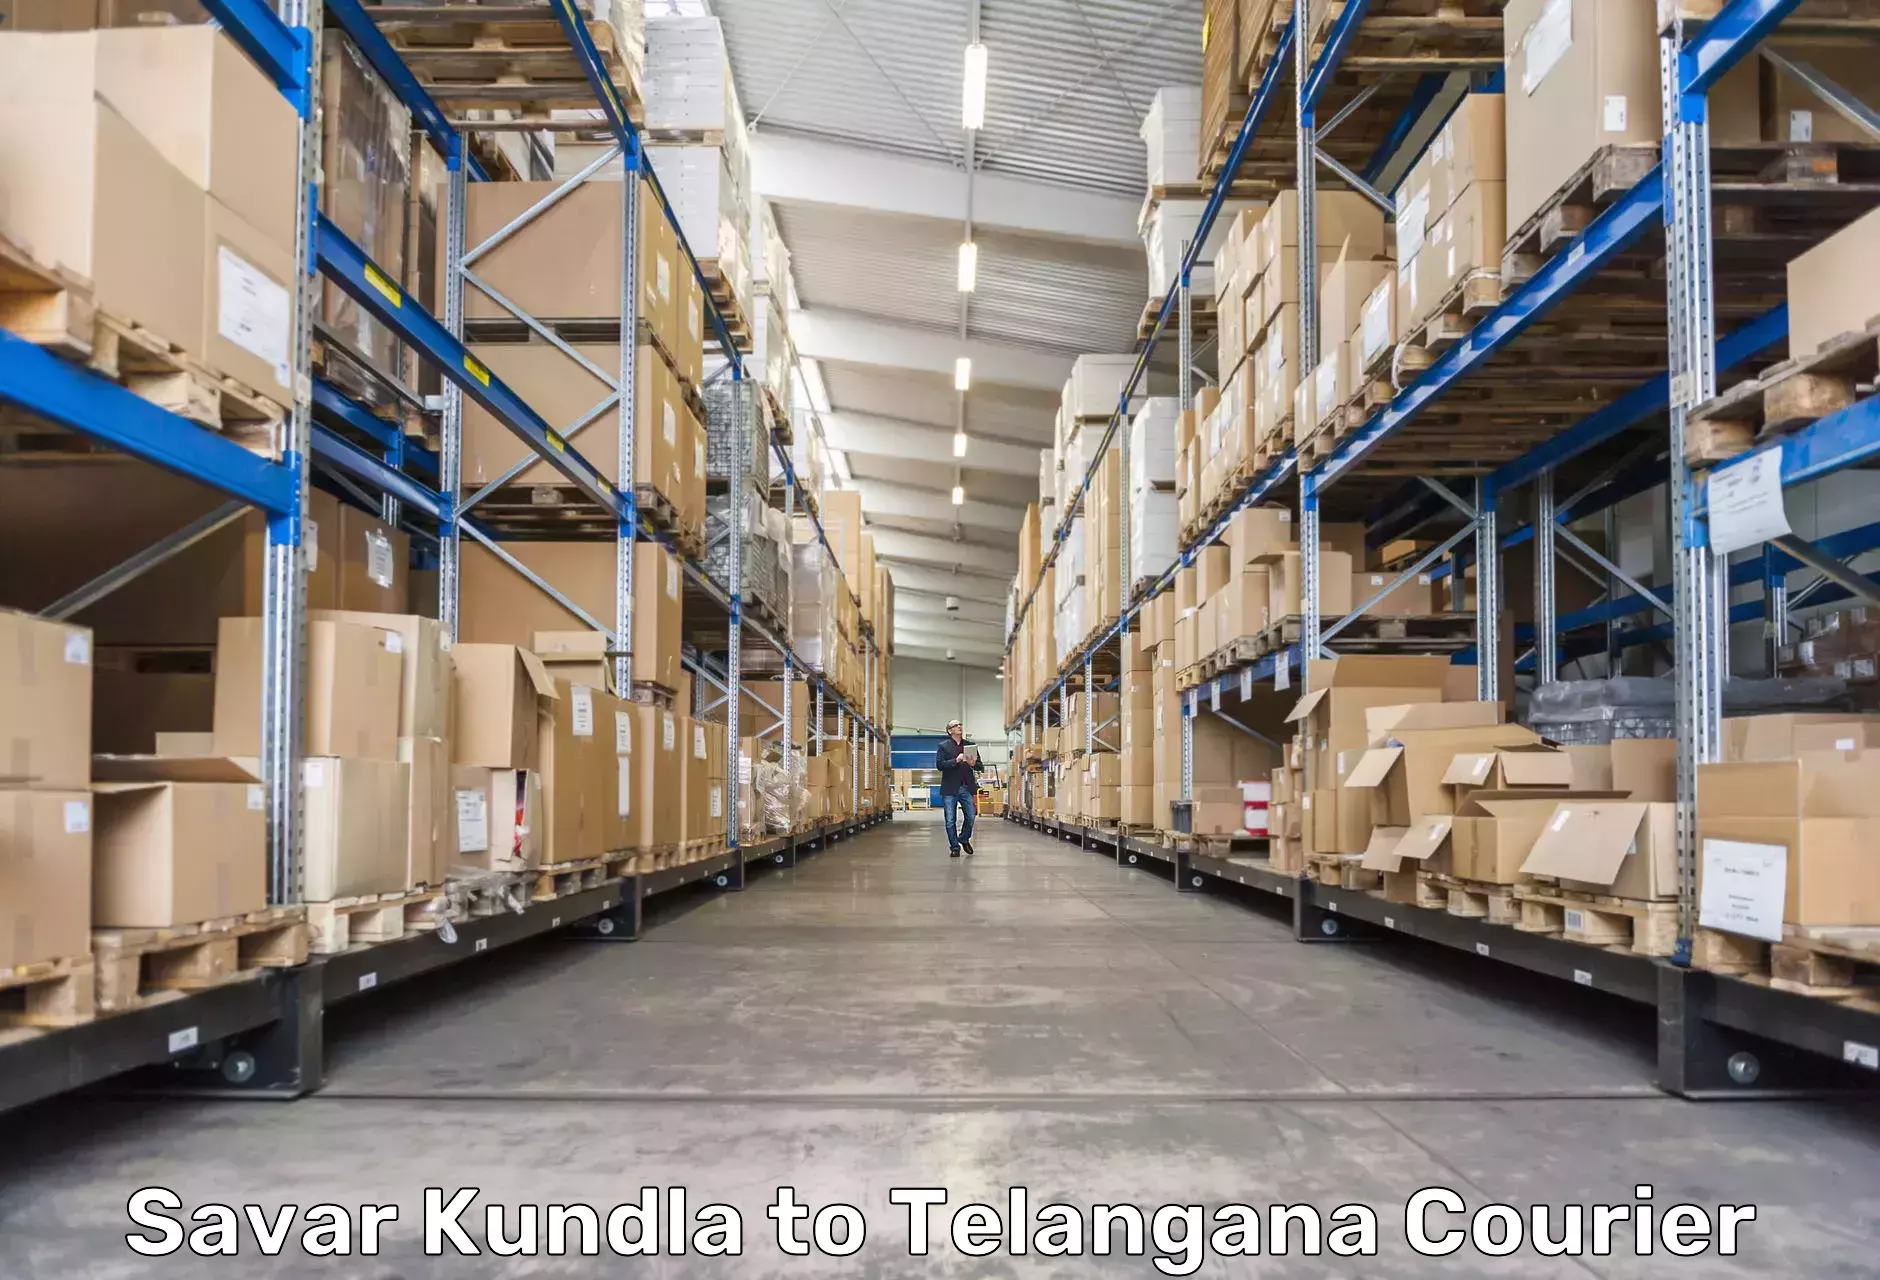 Global logistics network Savar Kundla to Veenavanka